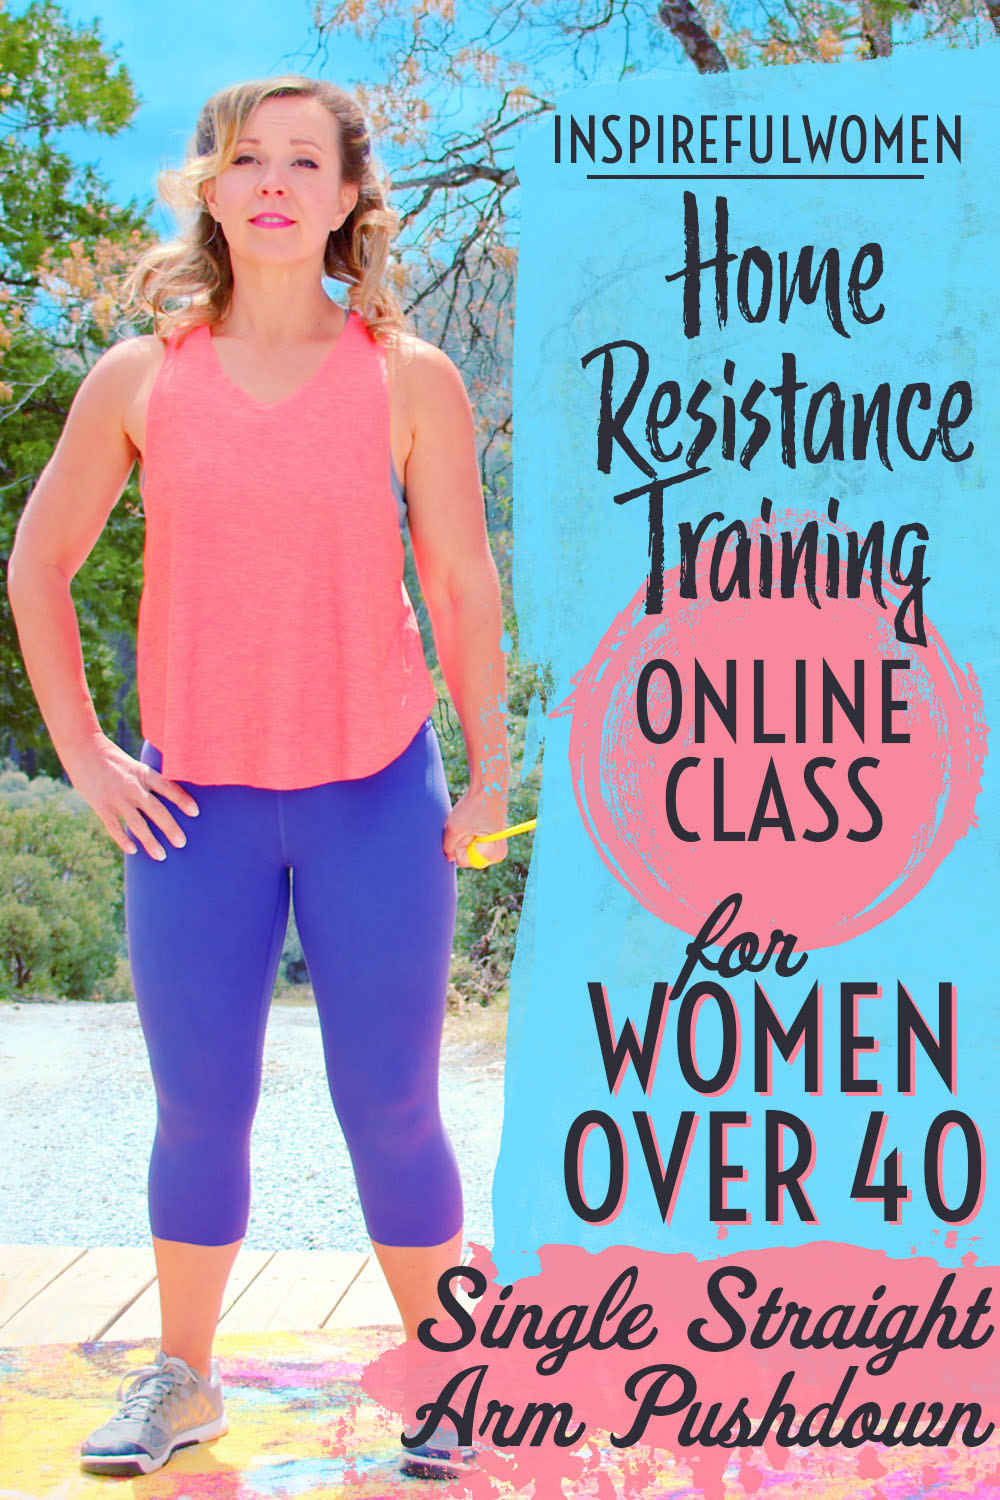 single-straight-arm-pushdown-back-exercise-home-resistance-training-online-class-women-40+